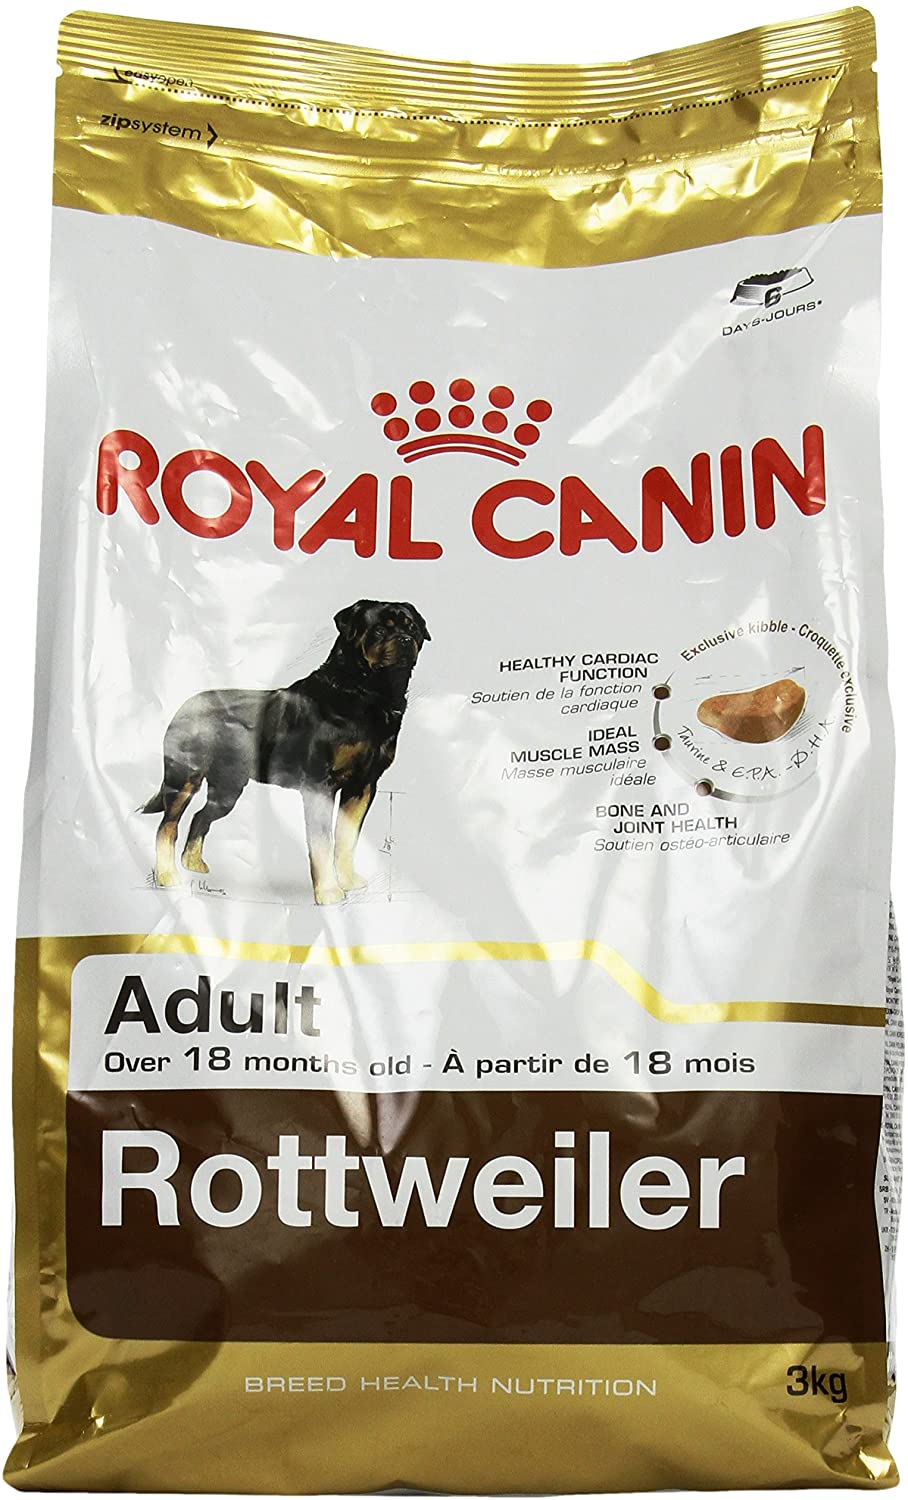  Royal Canin C-08890 S.N. Rottweiler 26 - 12 Kg 